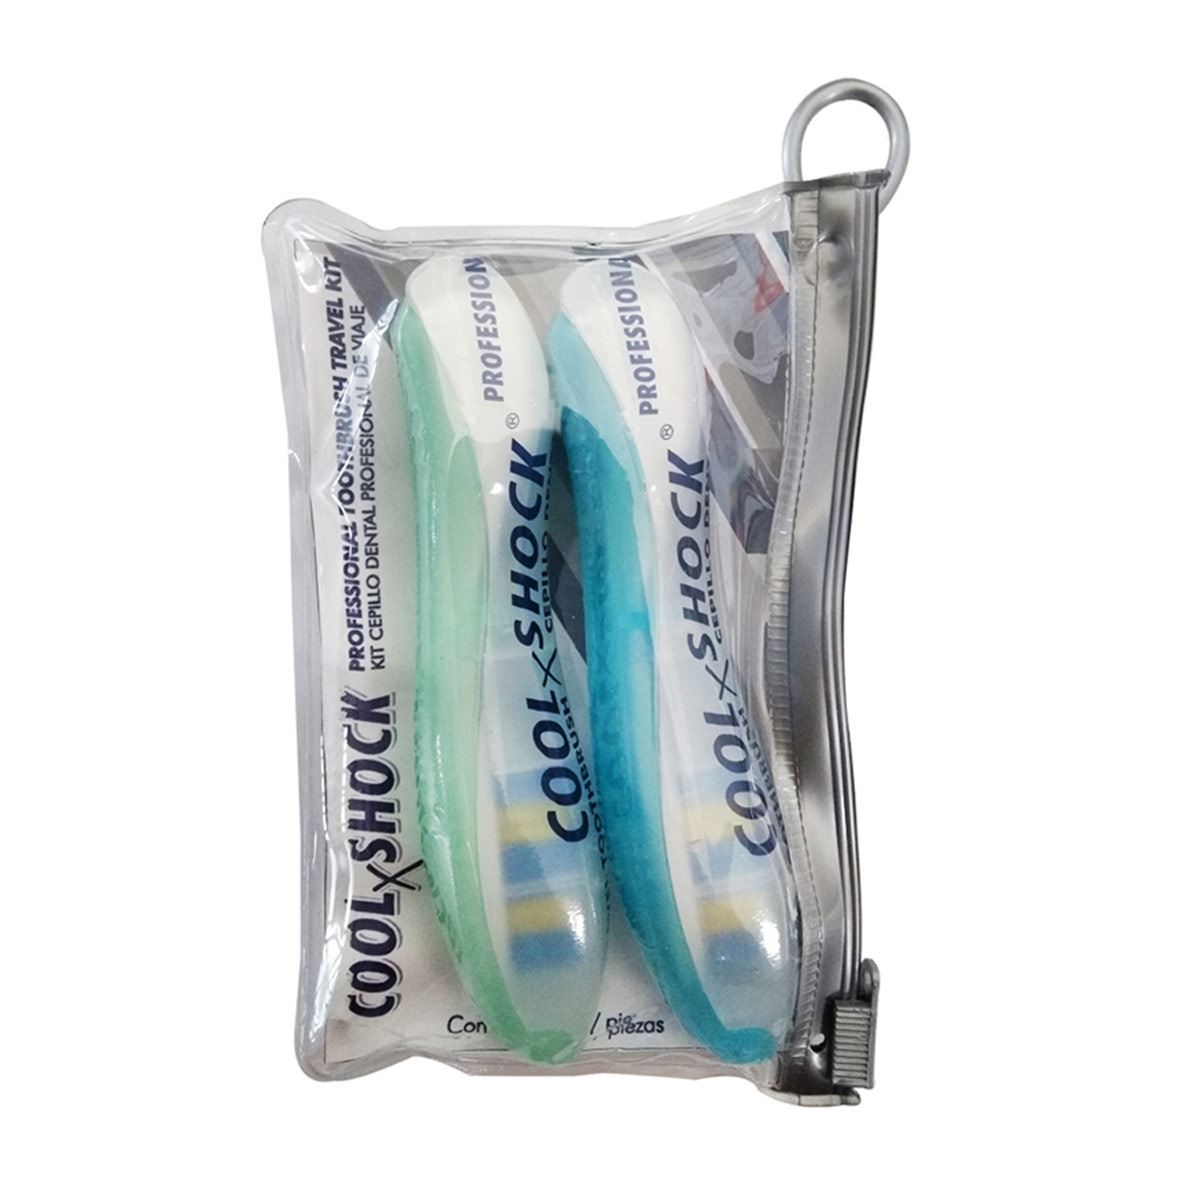 CoolxShock Kit Cepillo Dental de Viaje Profesional 2 pz